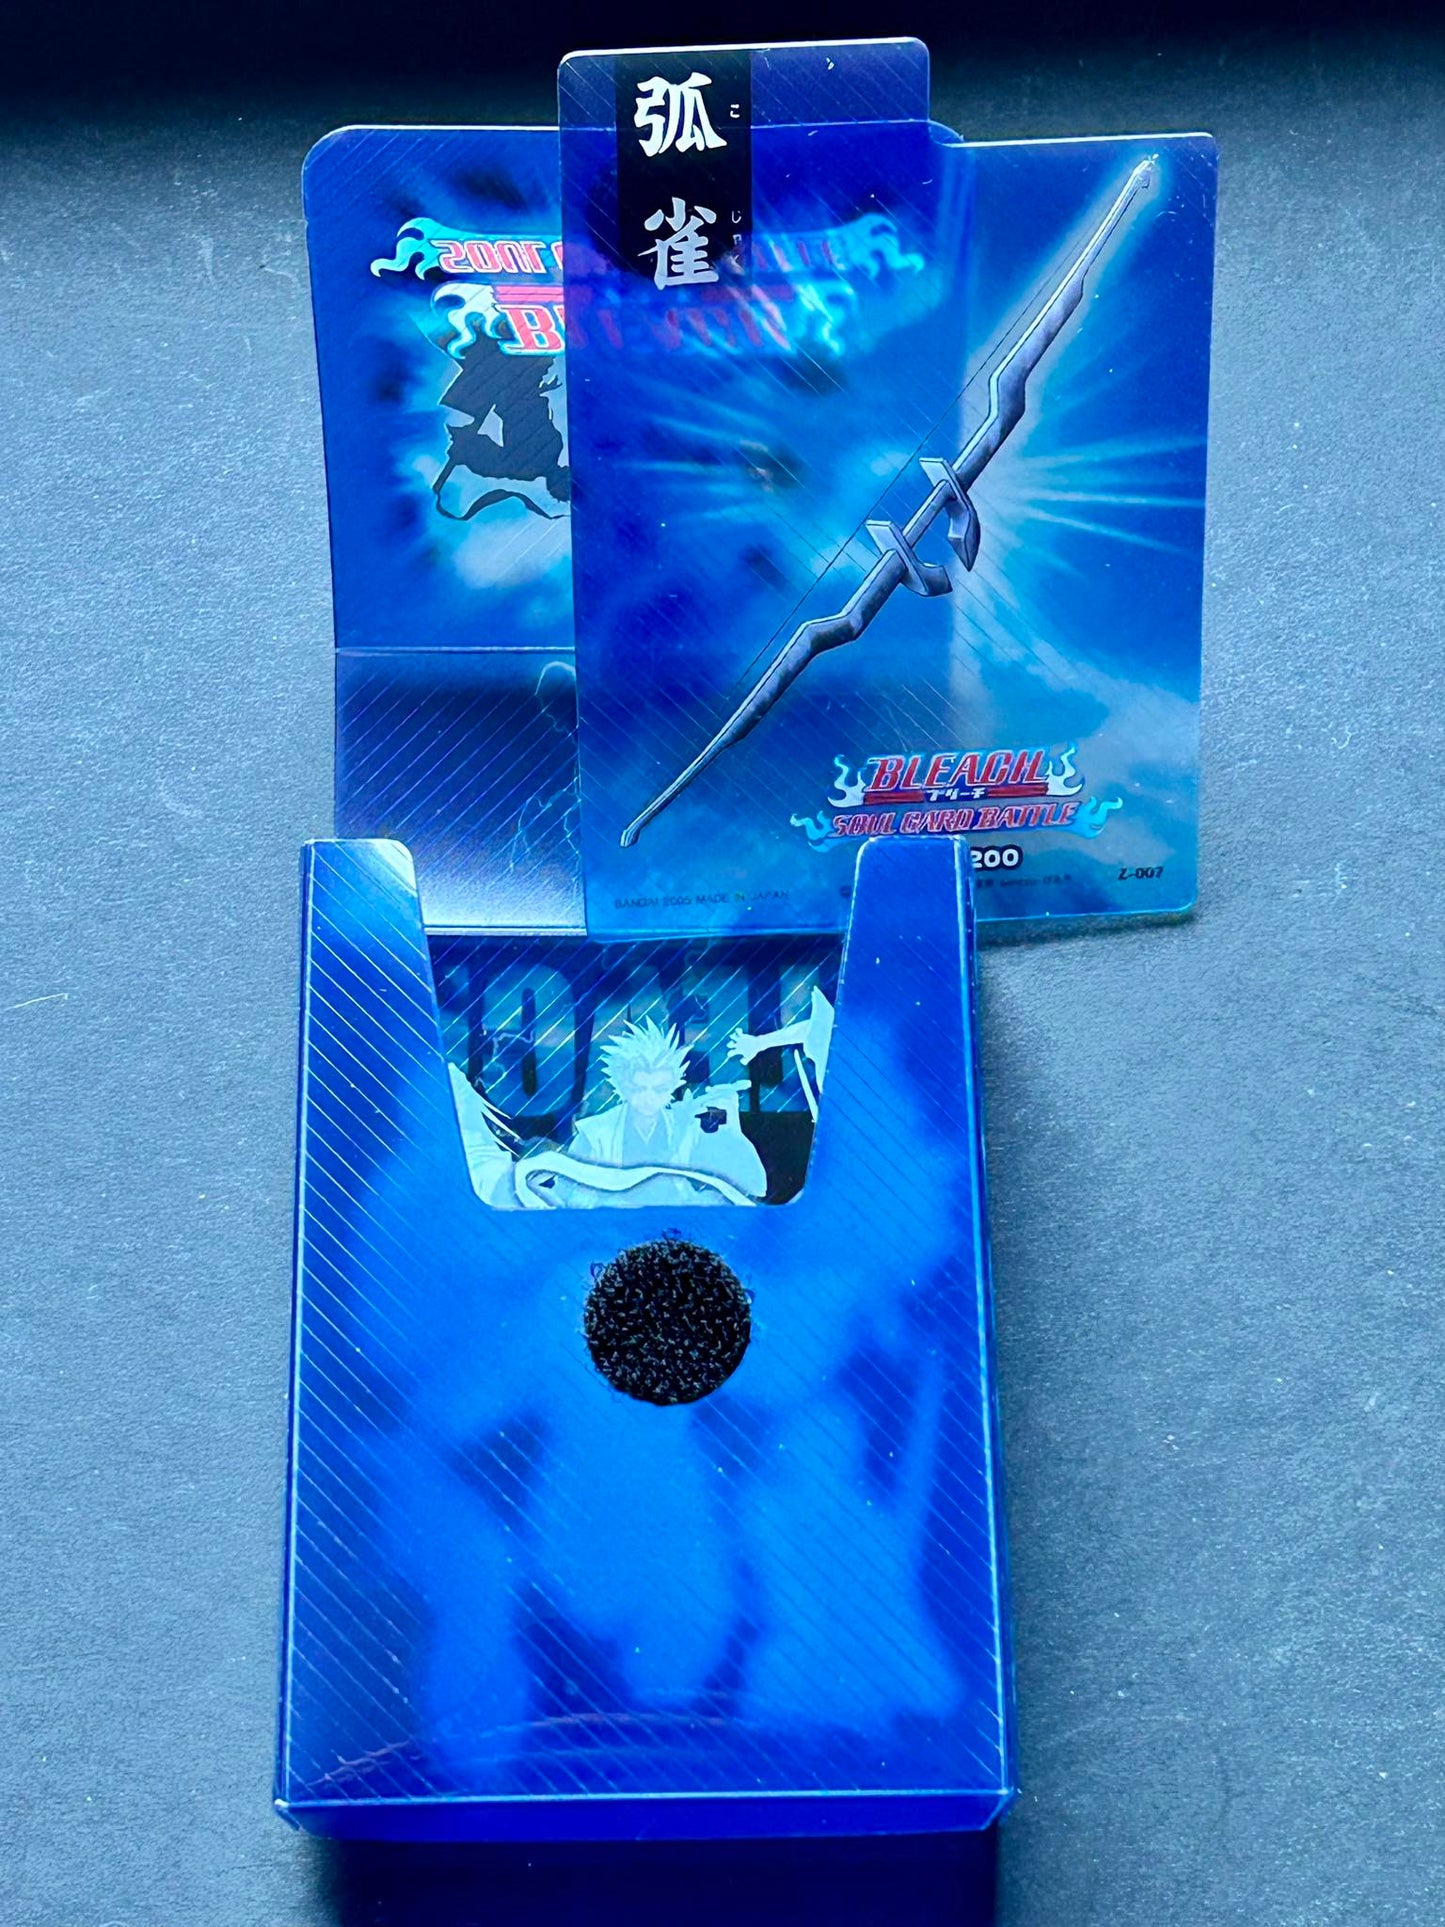 TCG Bleach Soul Card Battle Deck Opbergdoos 60 Kaarten [Japan Import]